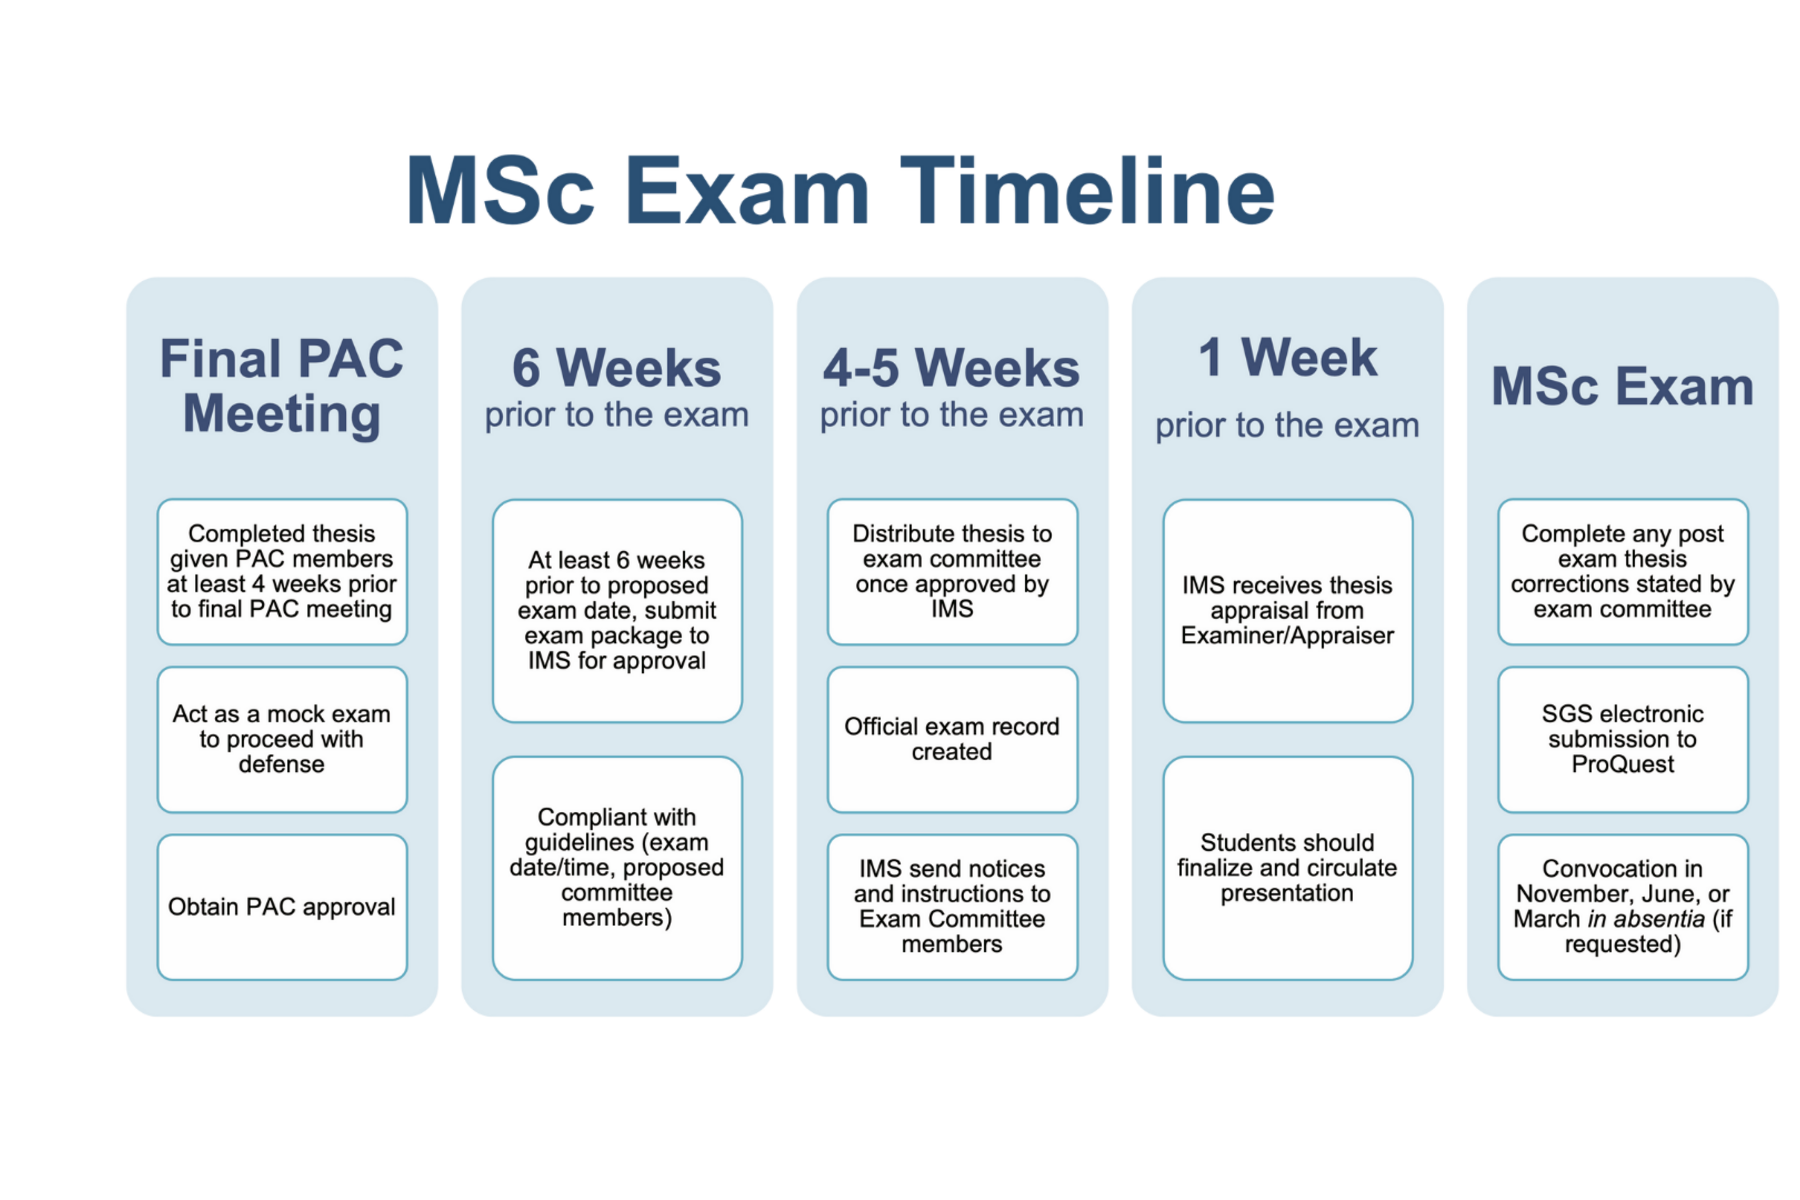 MSc Exam Timeline